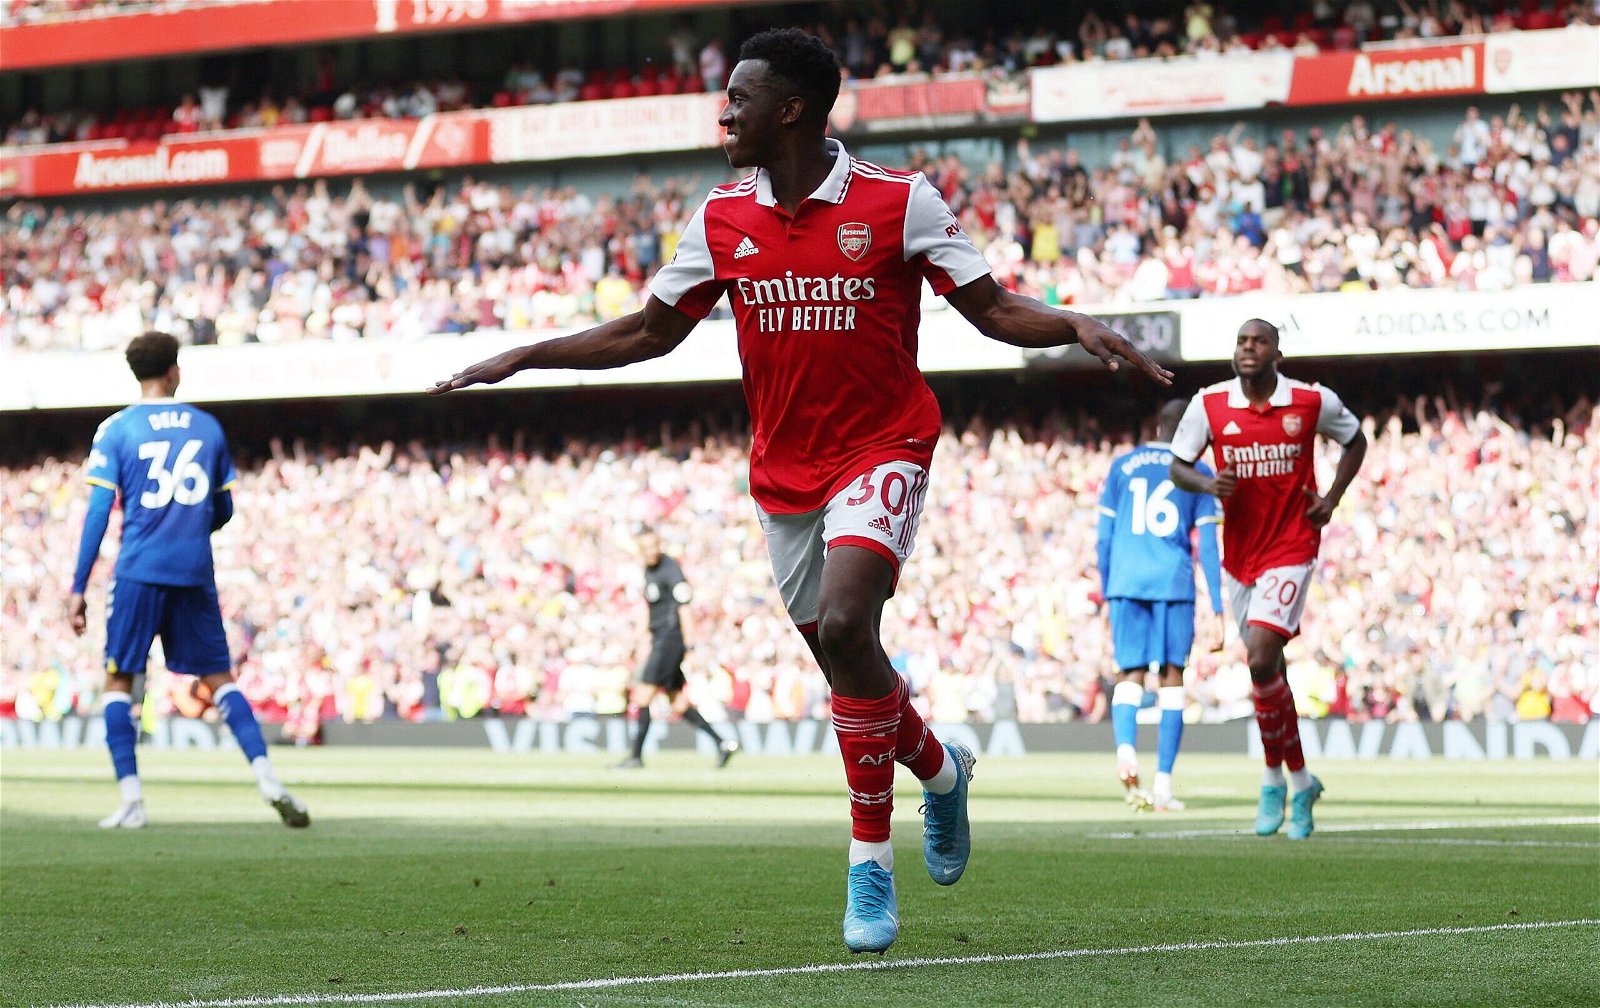 Eddie-Nketiah-celebrates-scoring-for-Arsenal-against-Everton-in-the-Premier-League